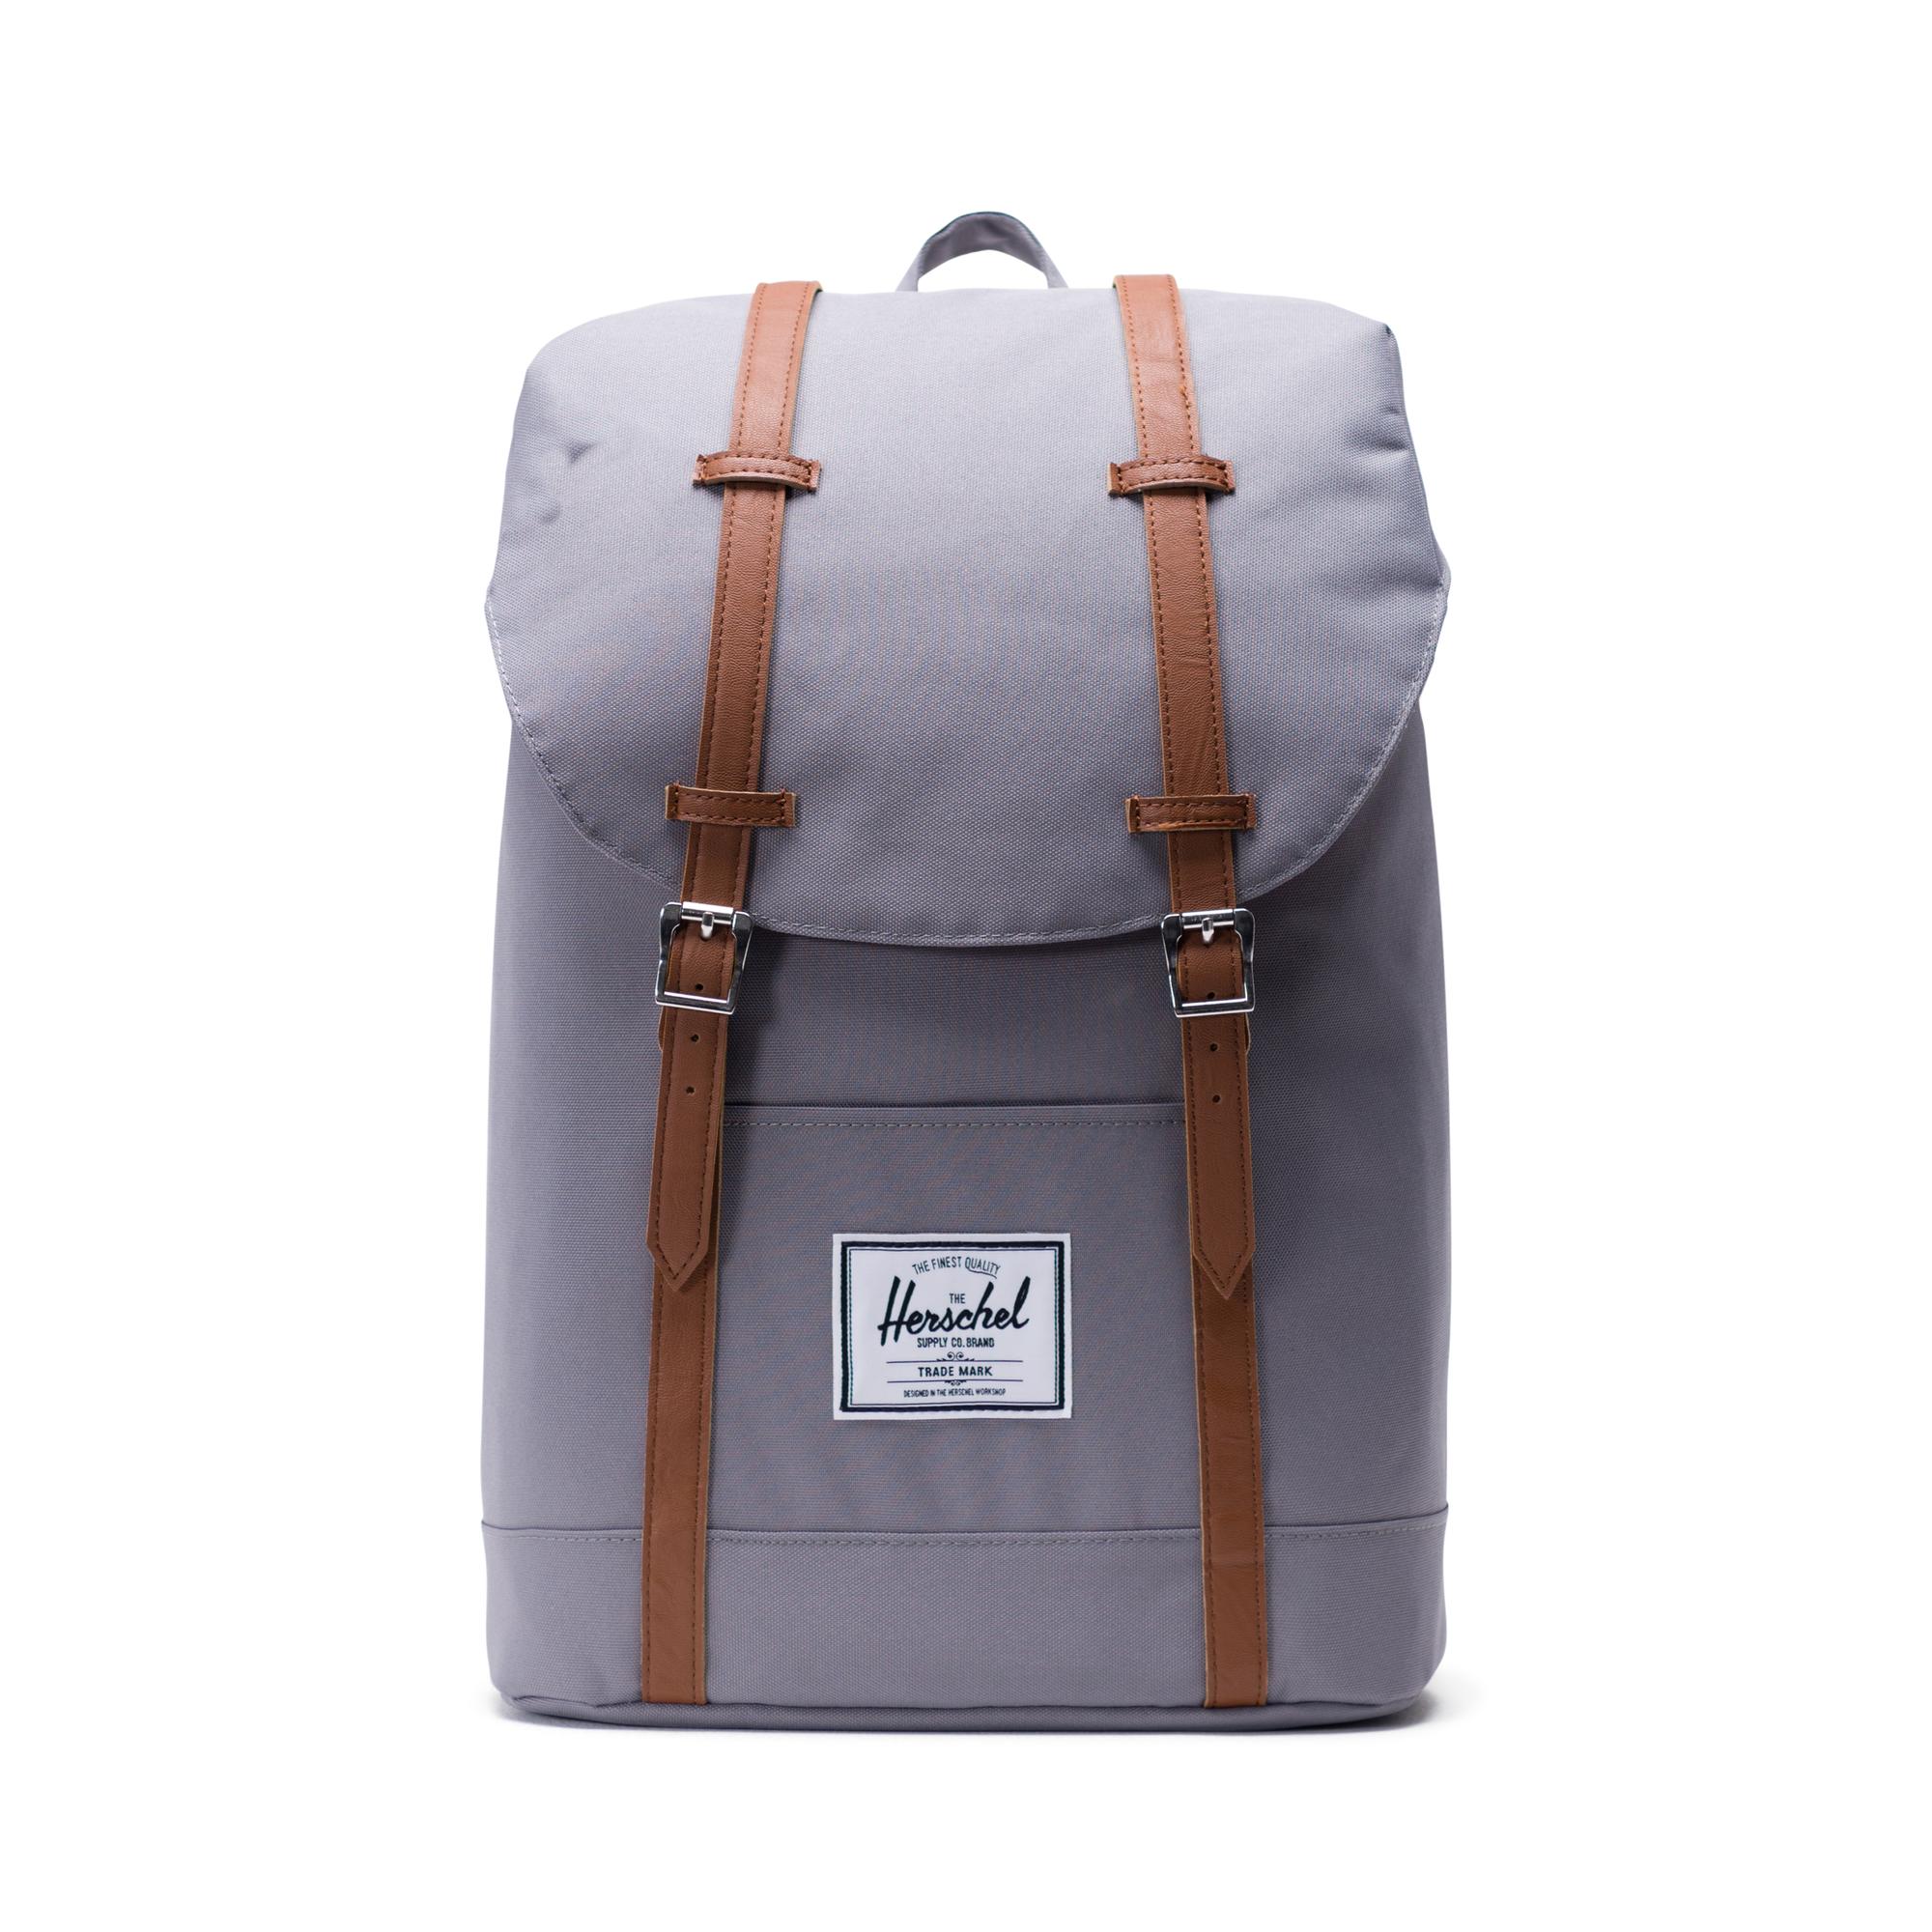 Shop Now For The Herschel Retreat Backpack | PCWorld Shop